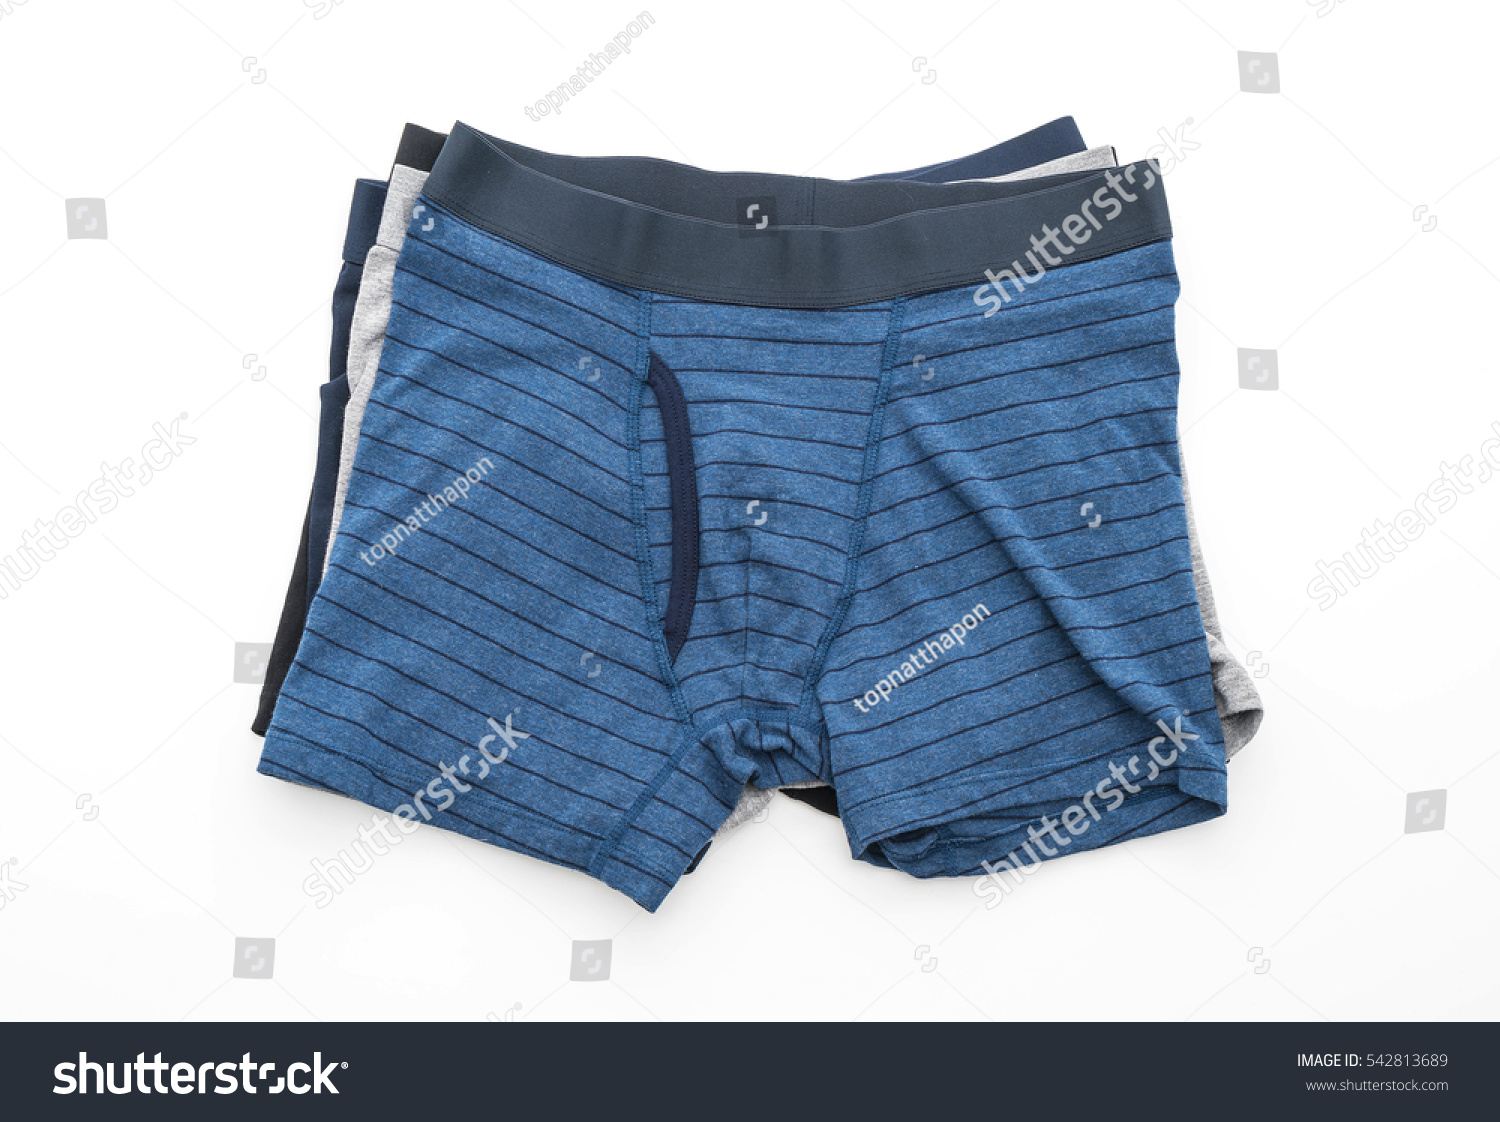 11,408 Striped underwear Images, Stock Photos & Vectors | Shutterstock